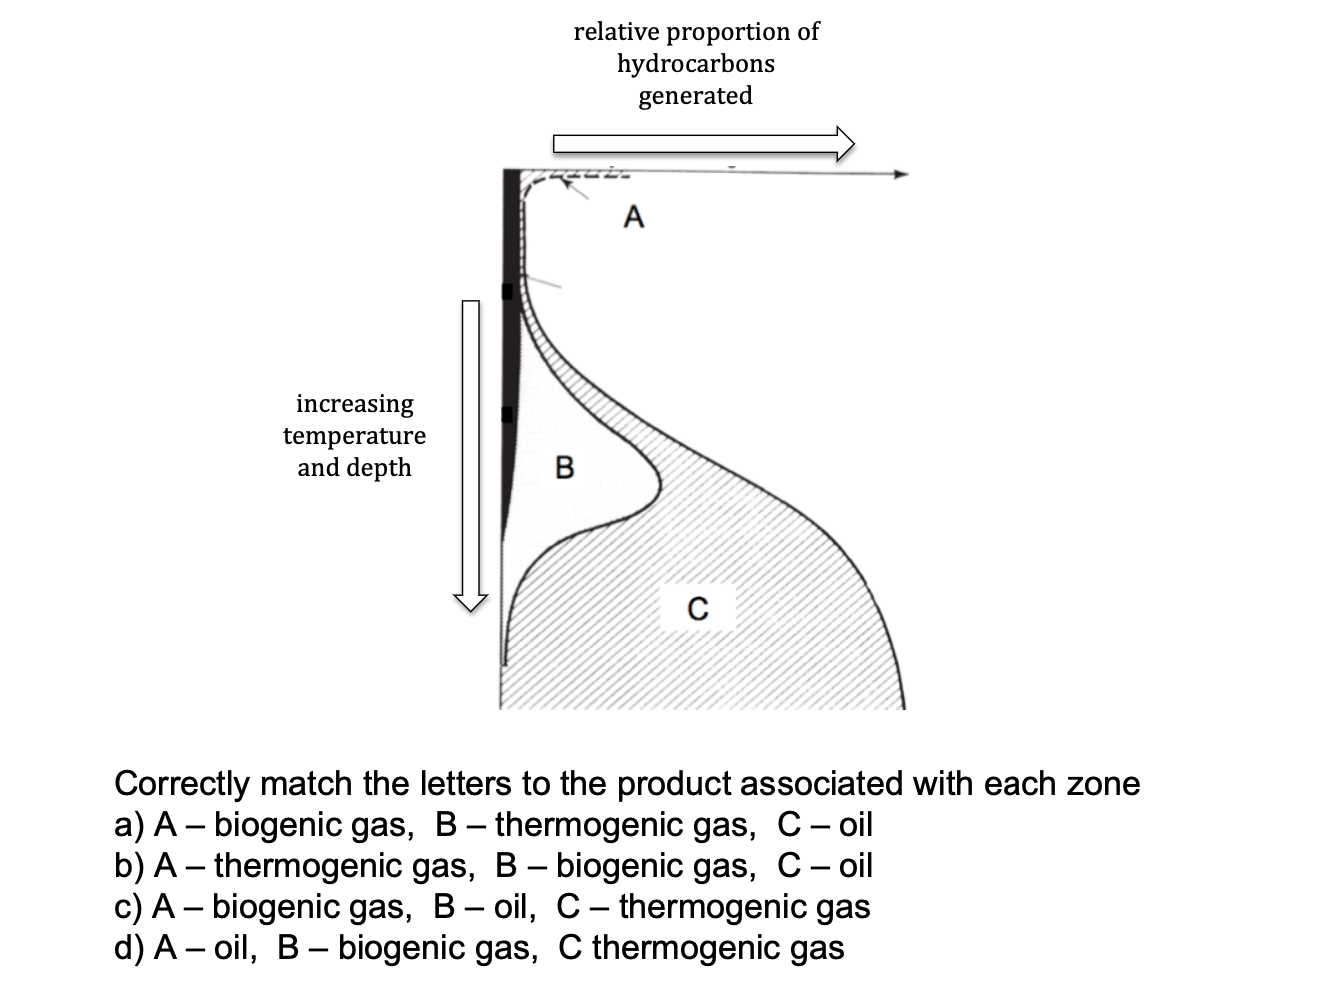 <p>A -biogenic gas, B - oil, C - thermogenic gas</p>